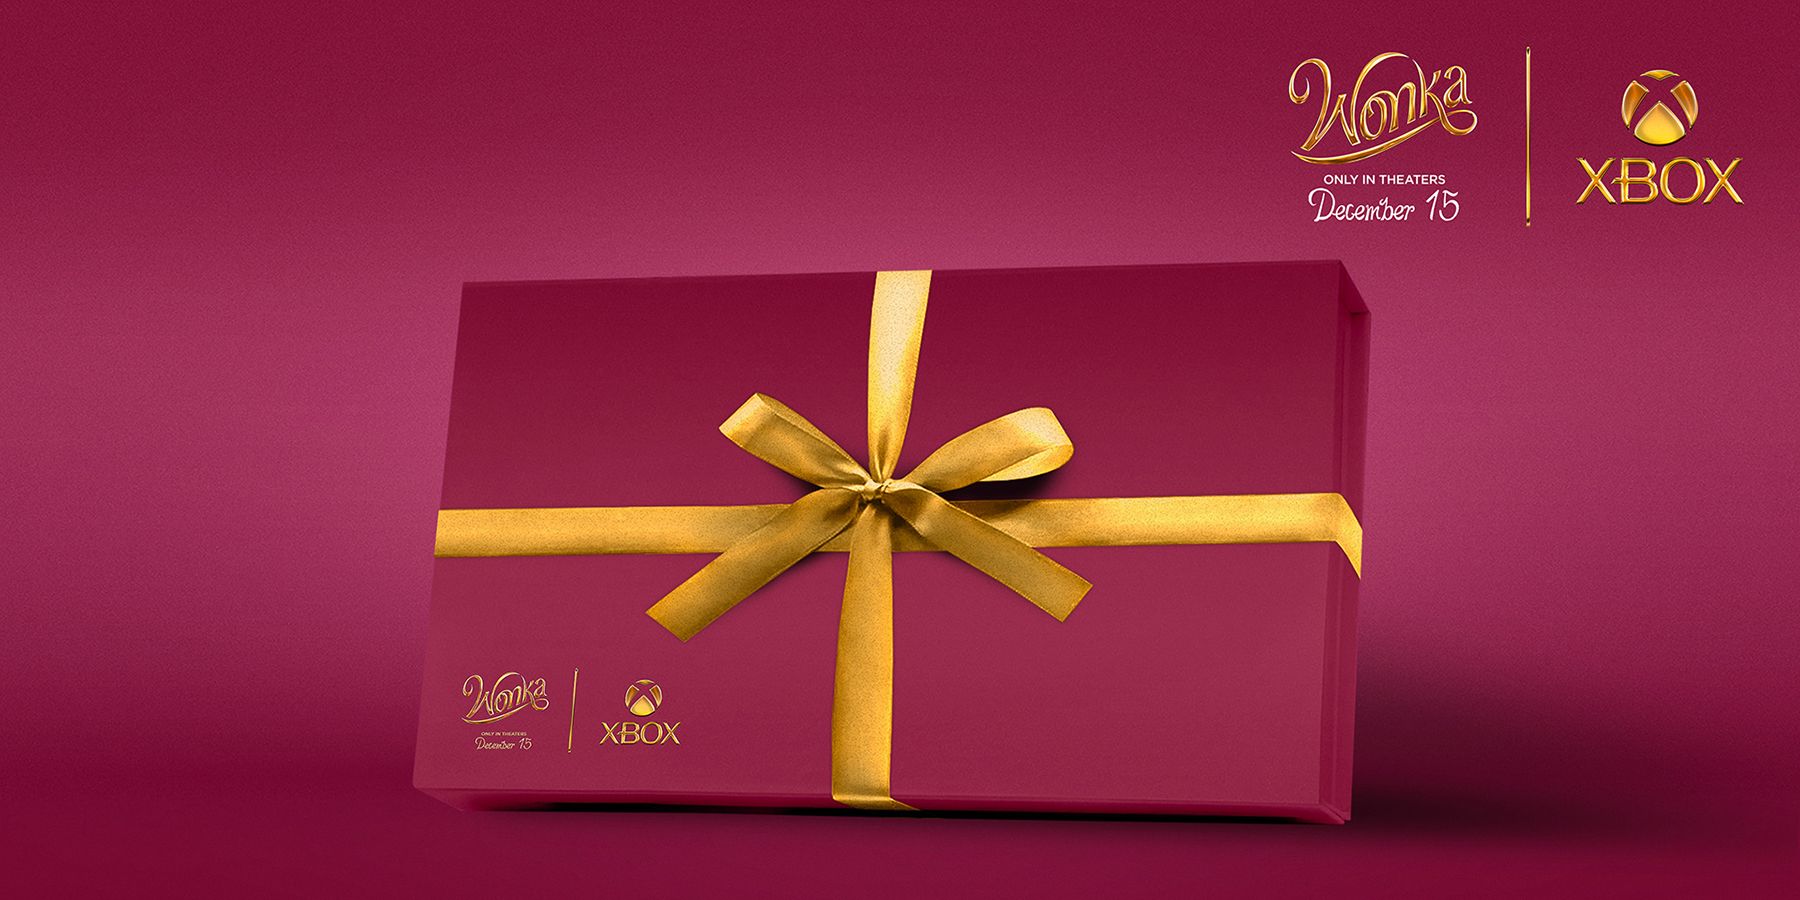 xbox wonka collab gift box